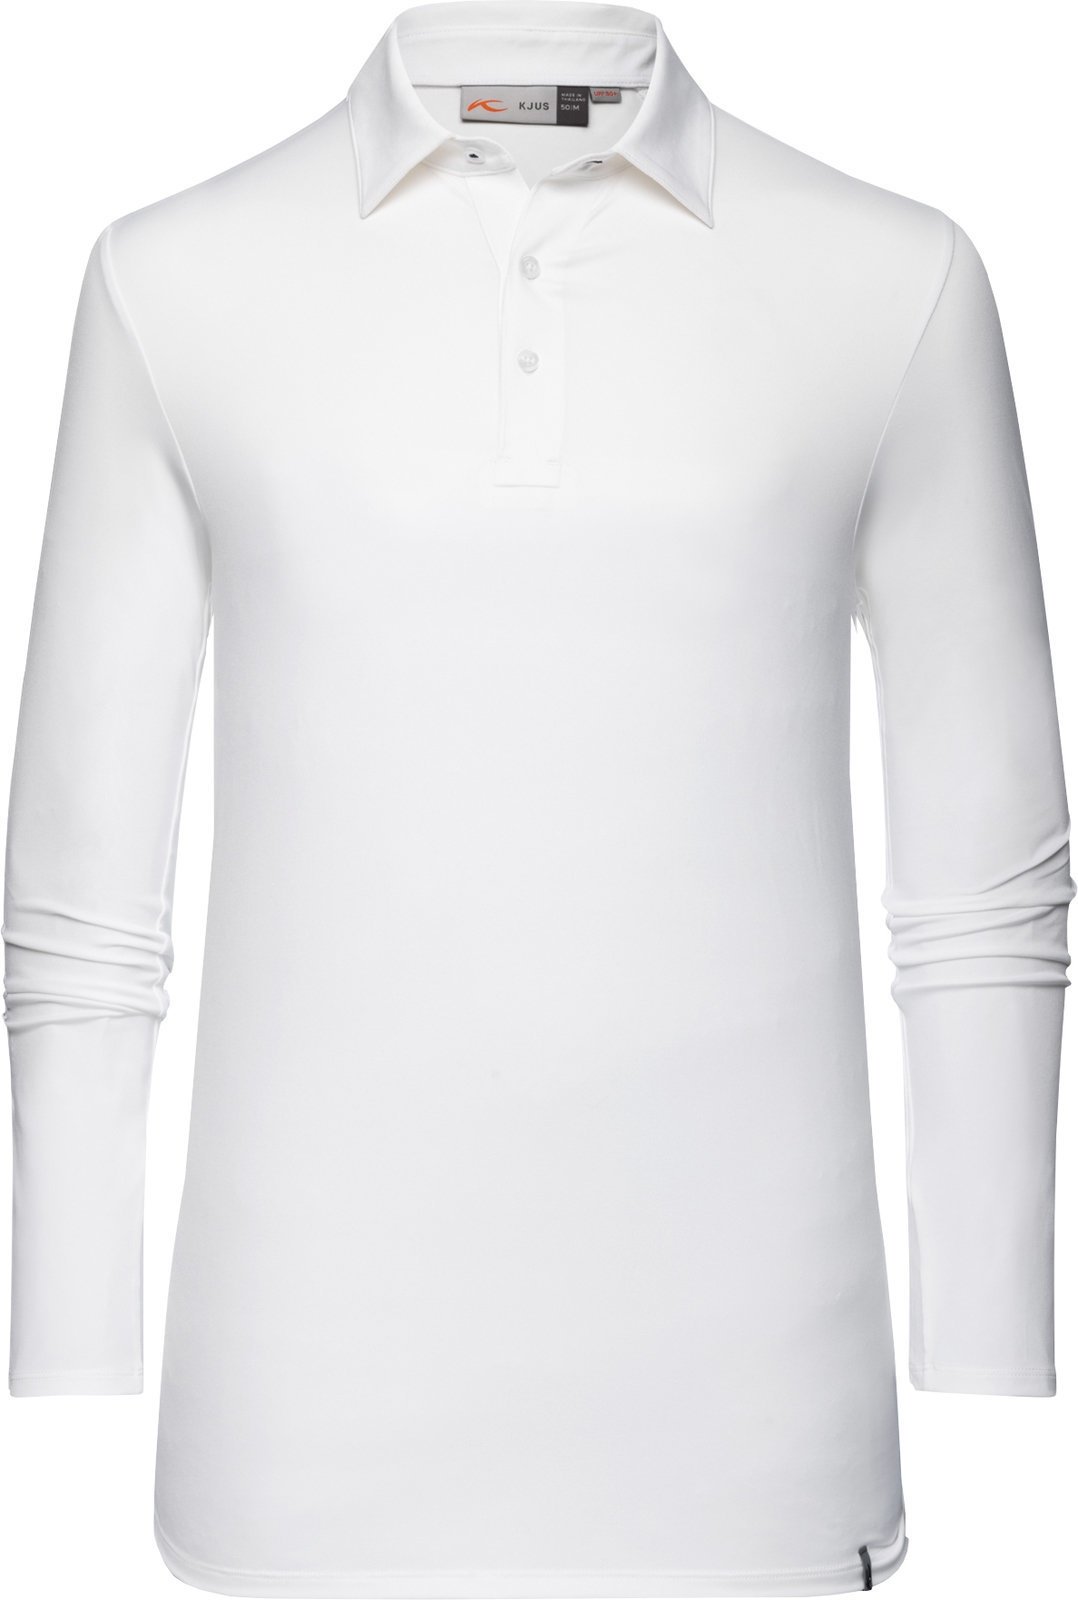 Koszulka Polo Kjus Soren Solid Biała 48